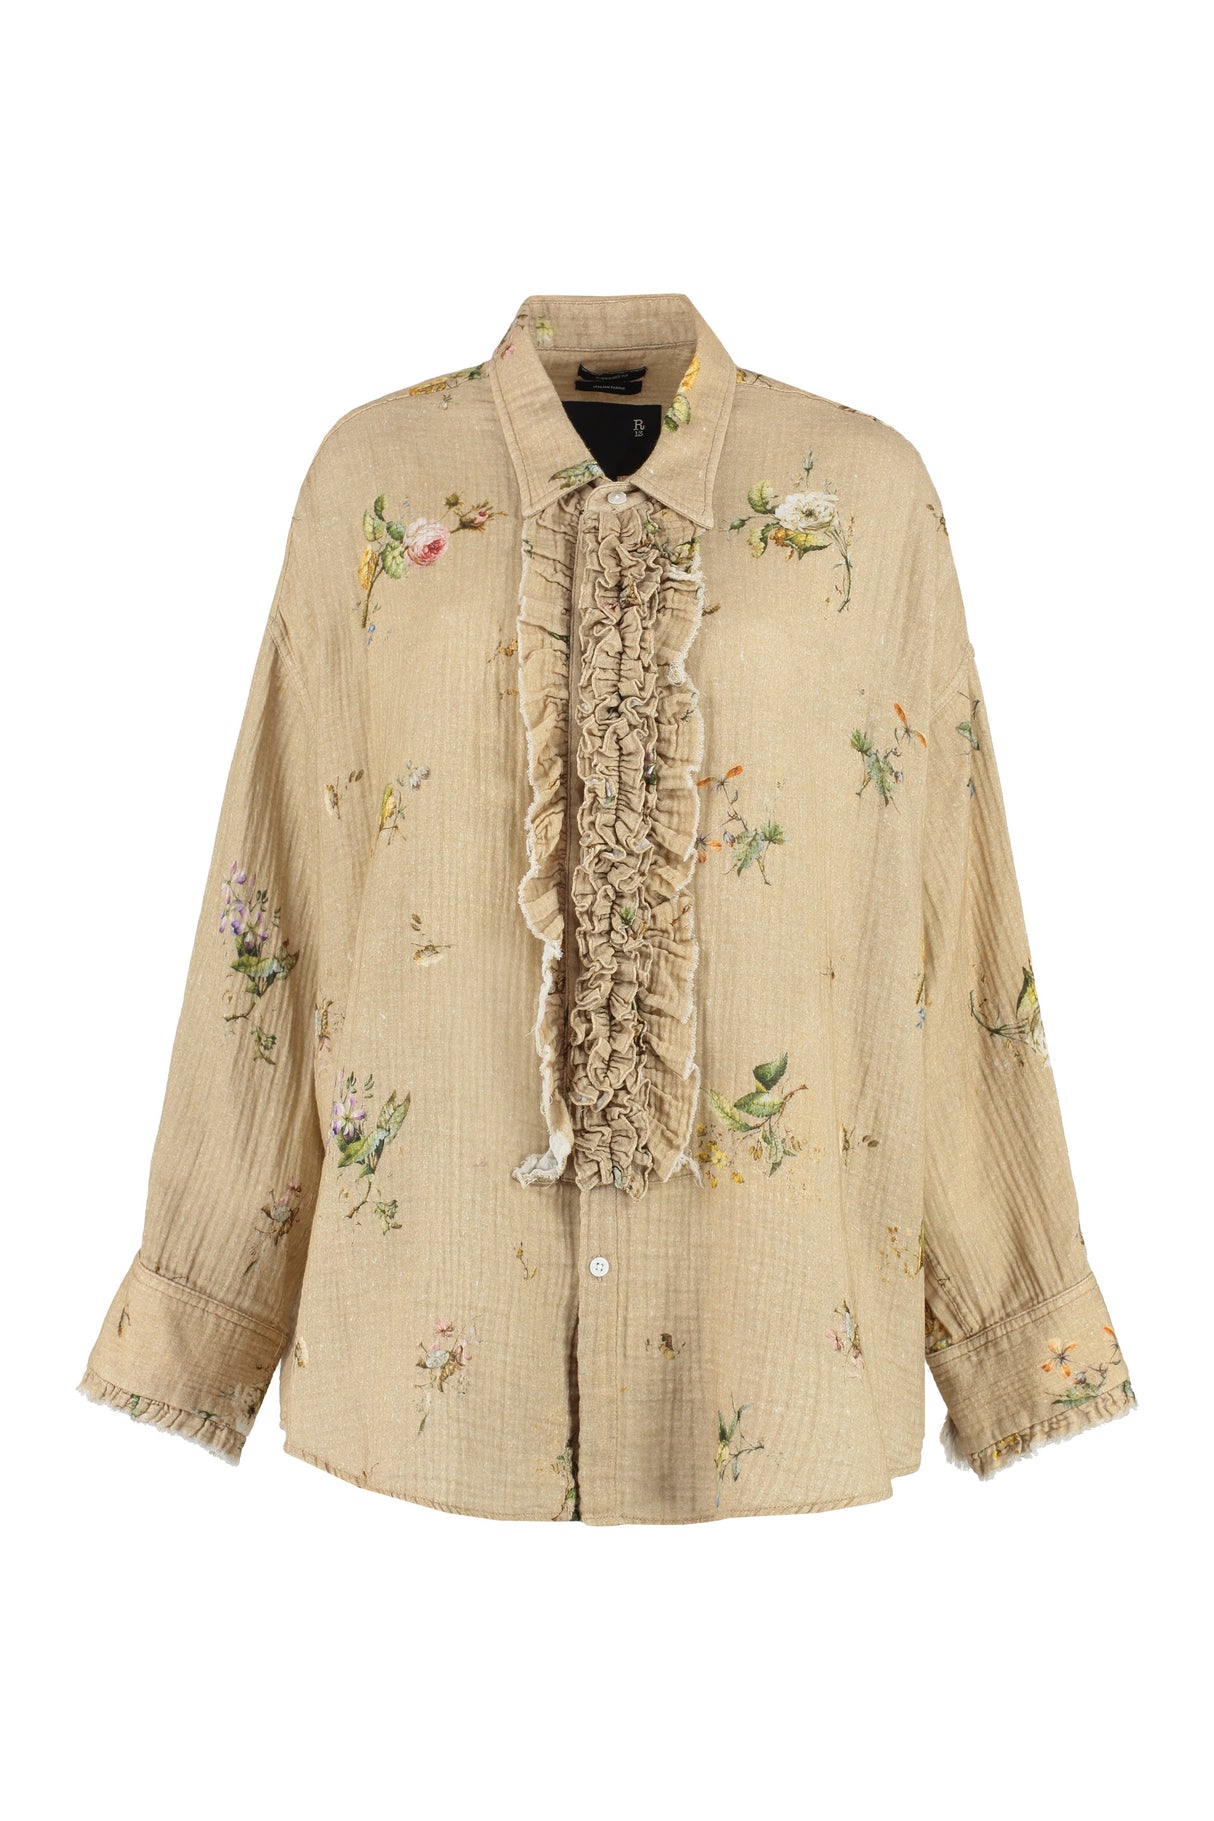 R13 Floral Print Ruffled Cotton Shirt for Women - Beige